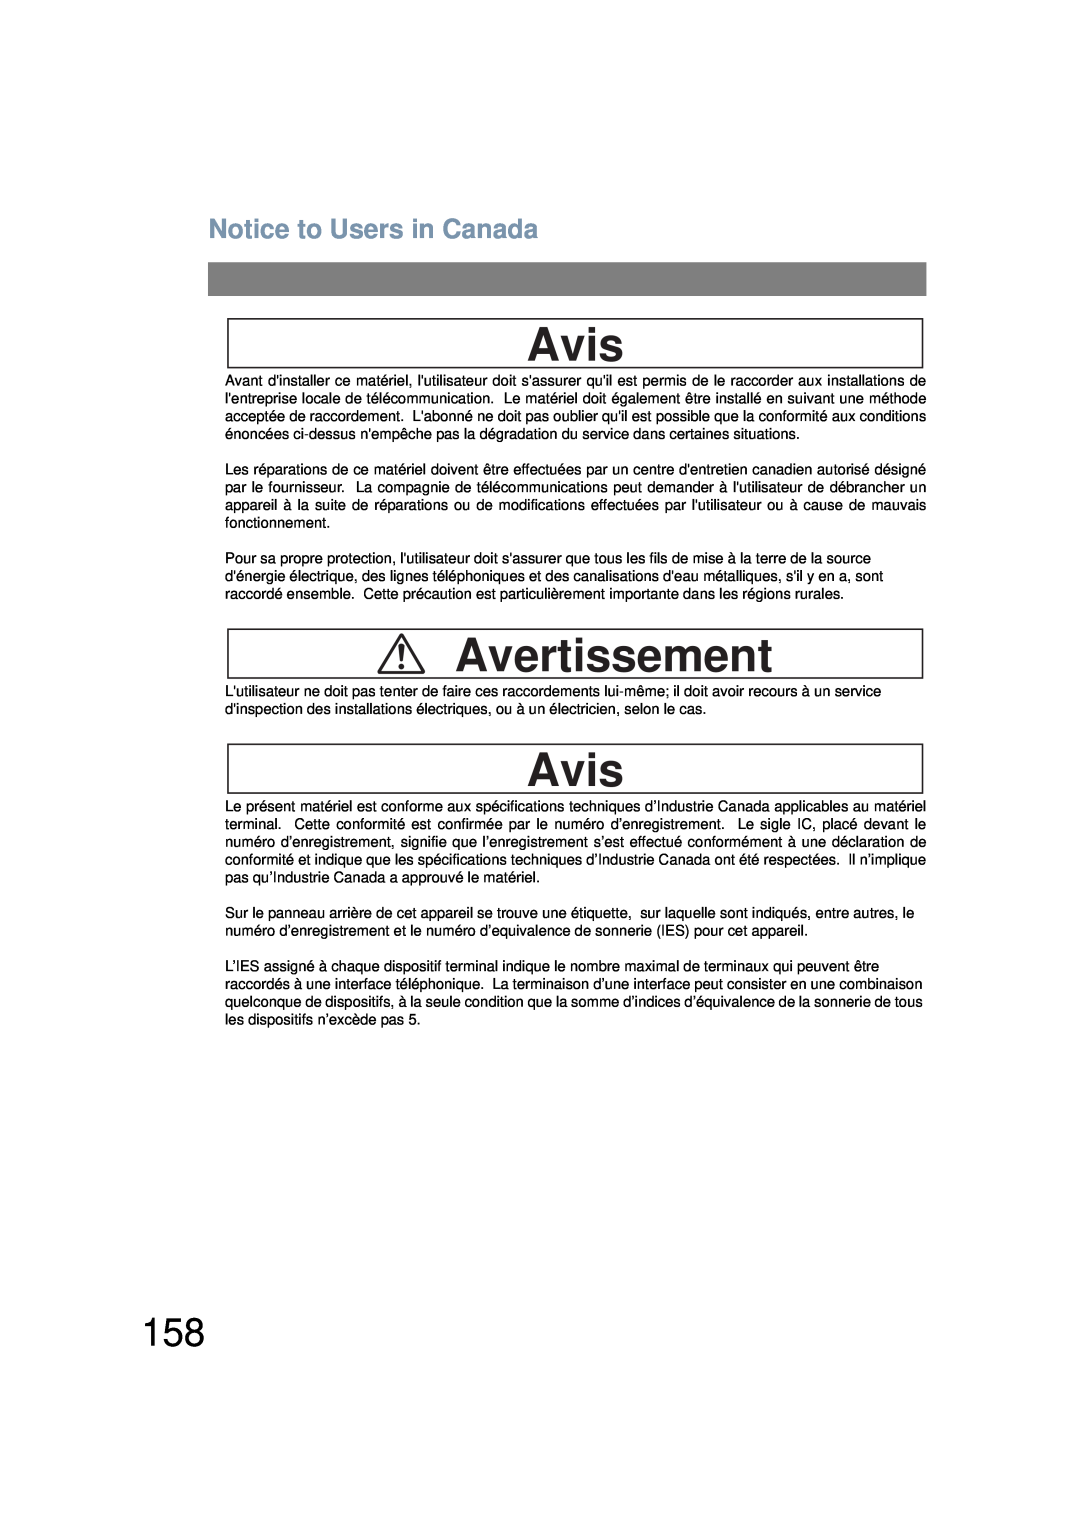 Panasonic UF-6200 operating instructions Notice to Users in Canada, Avis, Avertissement 